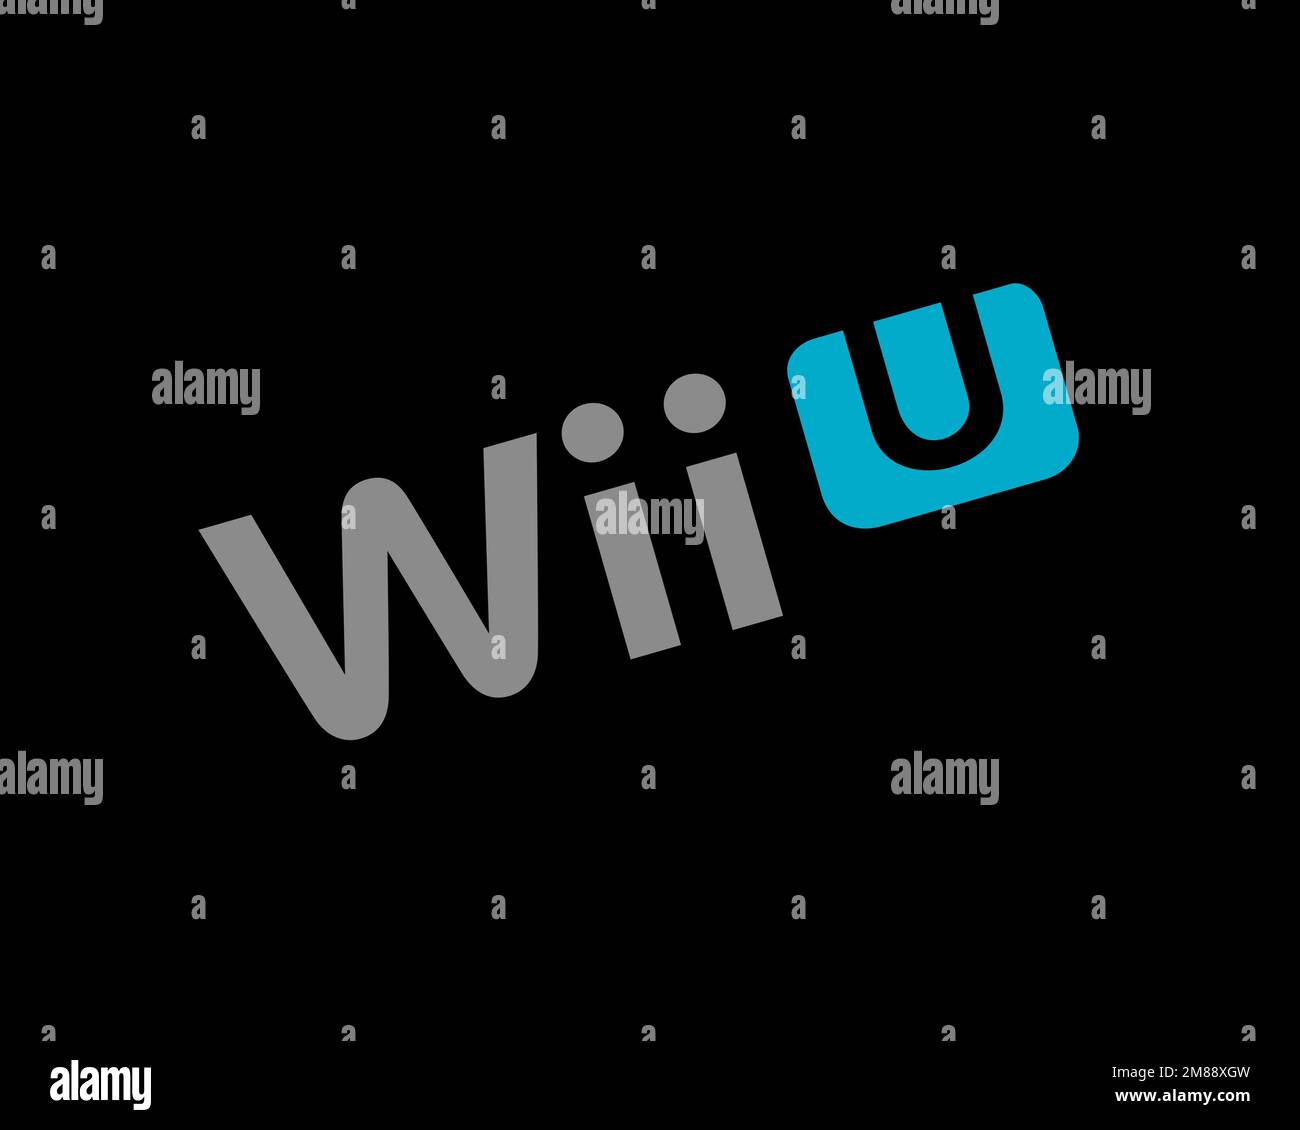 Wii U, rotated logo, black background Stock Photo - Alamy